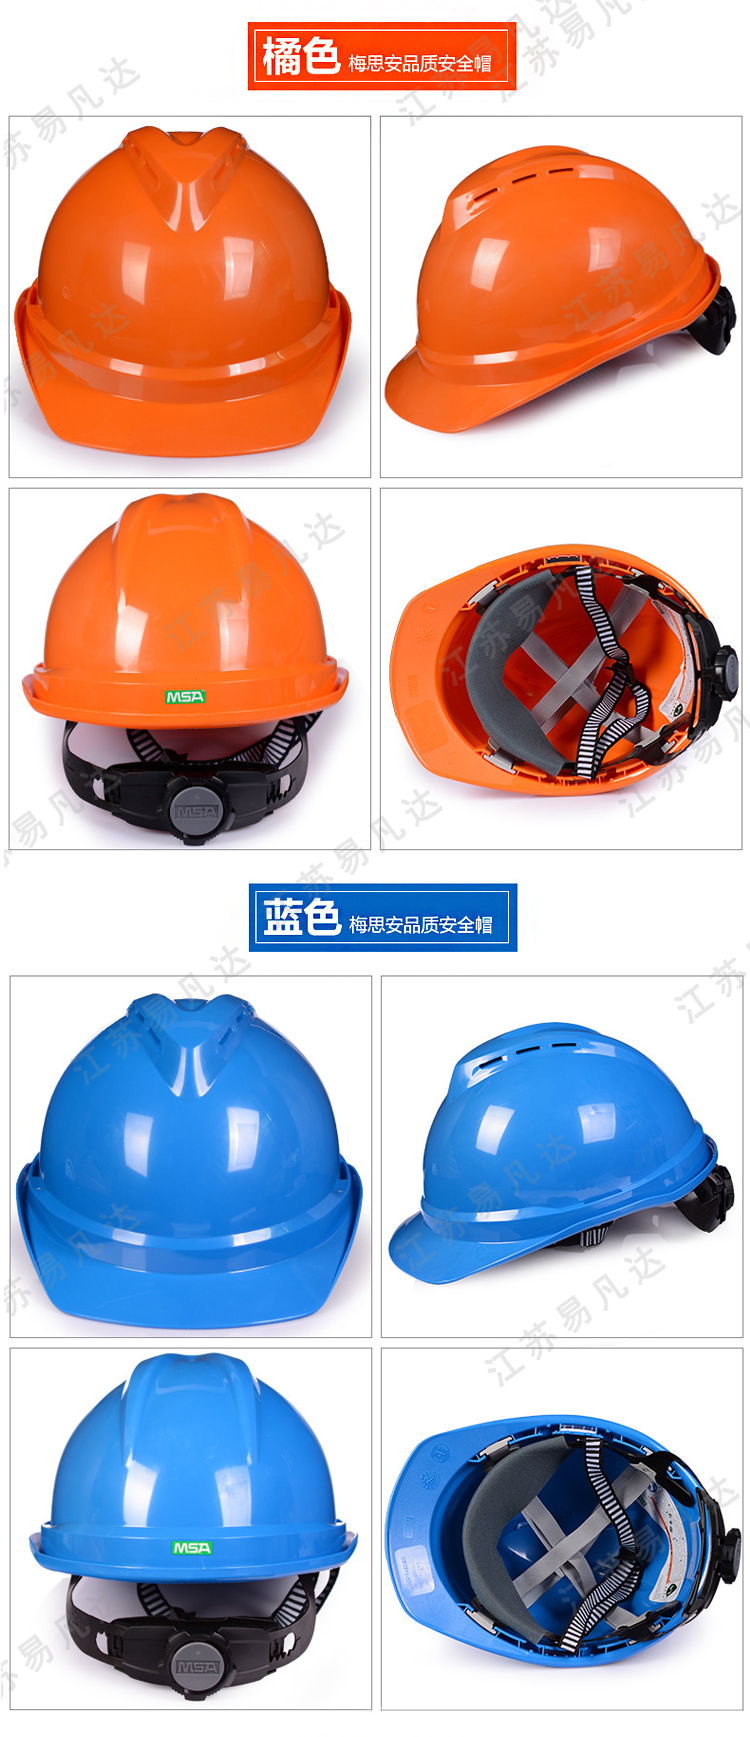 MSA梅思安500豪华安全帽、建筑工程领导工地施工透气安全头盔、VGARD梅思安安全帽